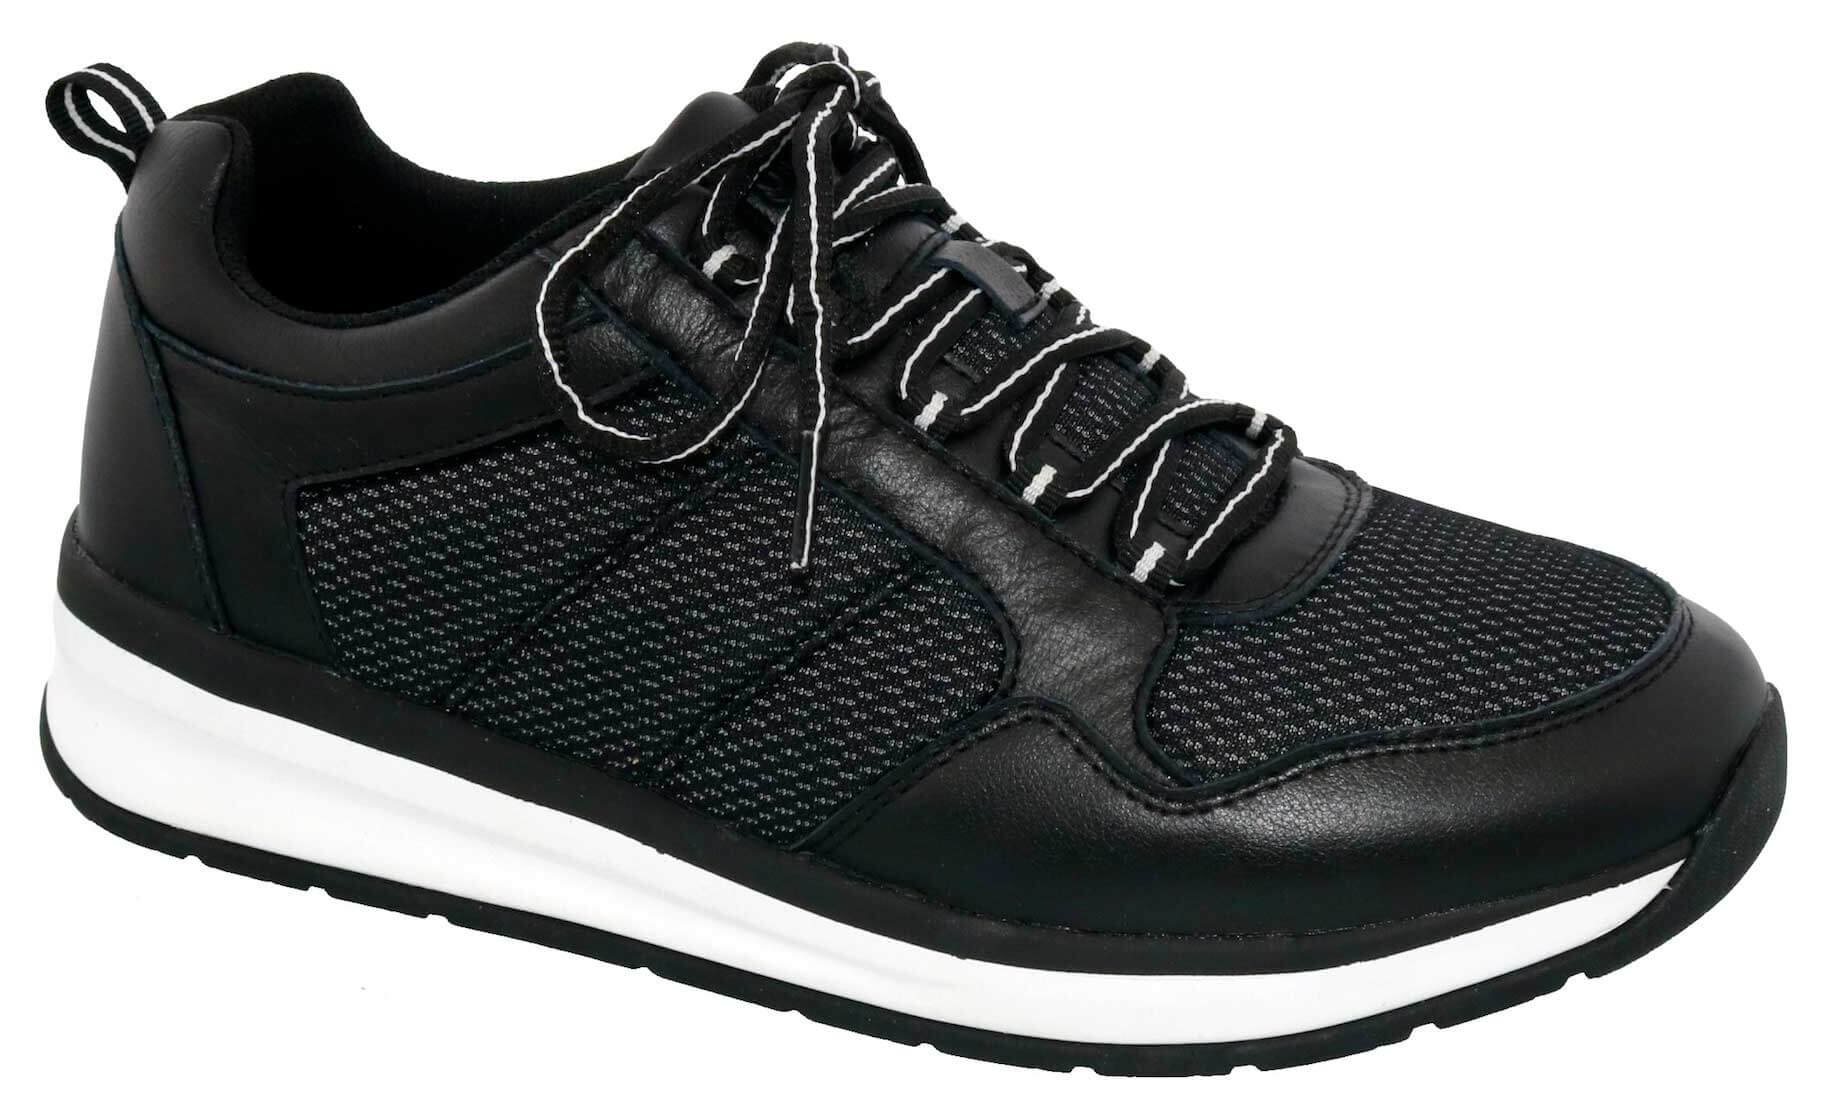 Drew Shoes Rocket 40992 - Men's Comfort Therapeutic Diabetic Athletic Shoe - Extra Depth For Orthotics